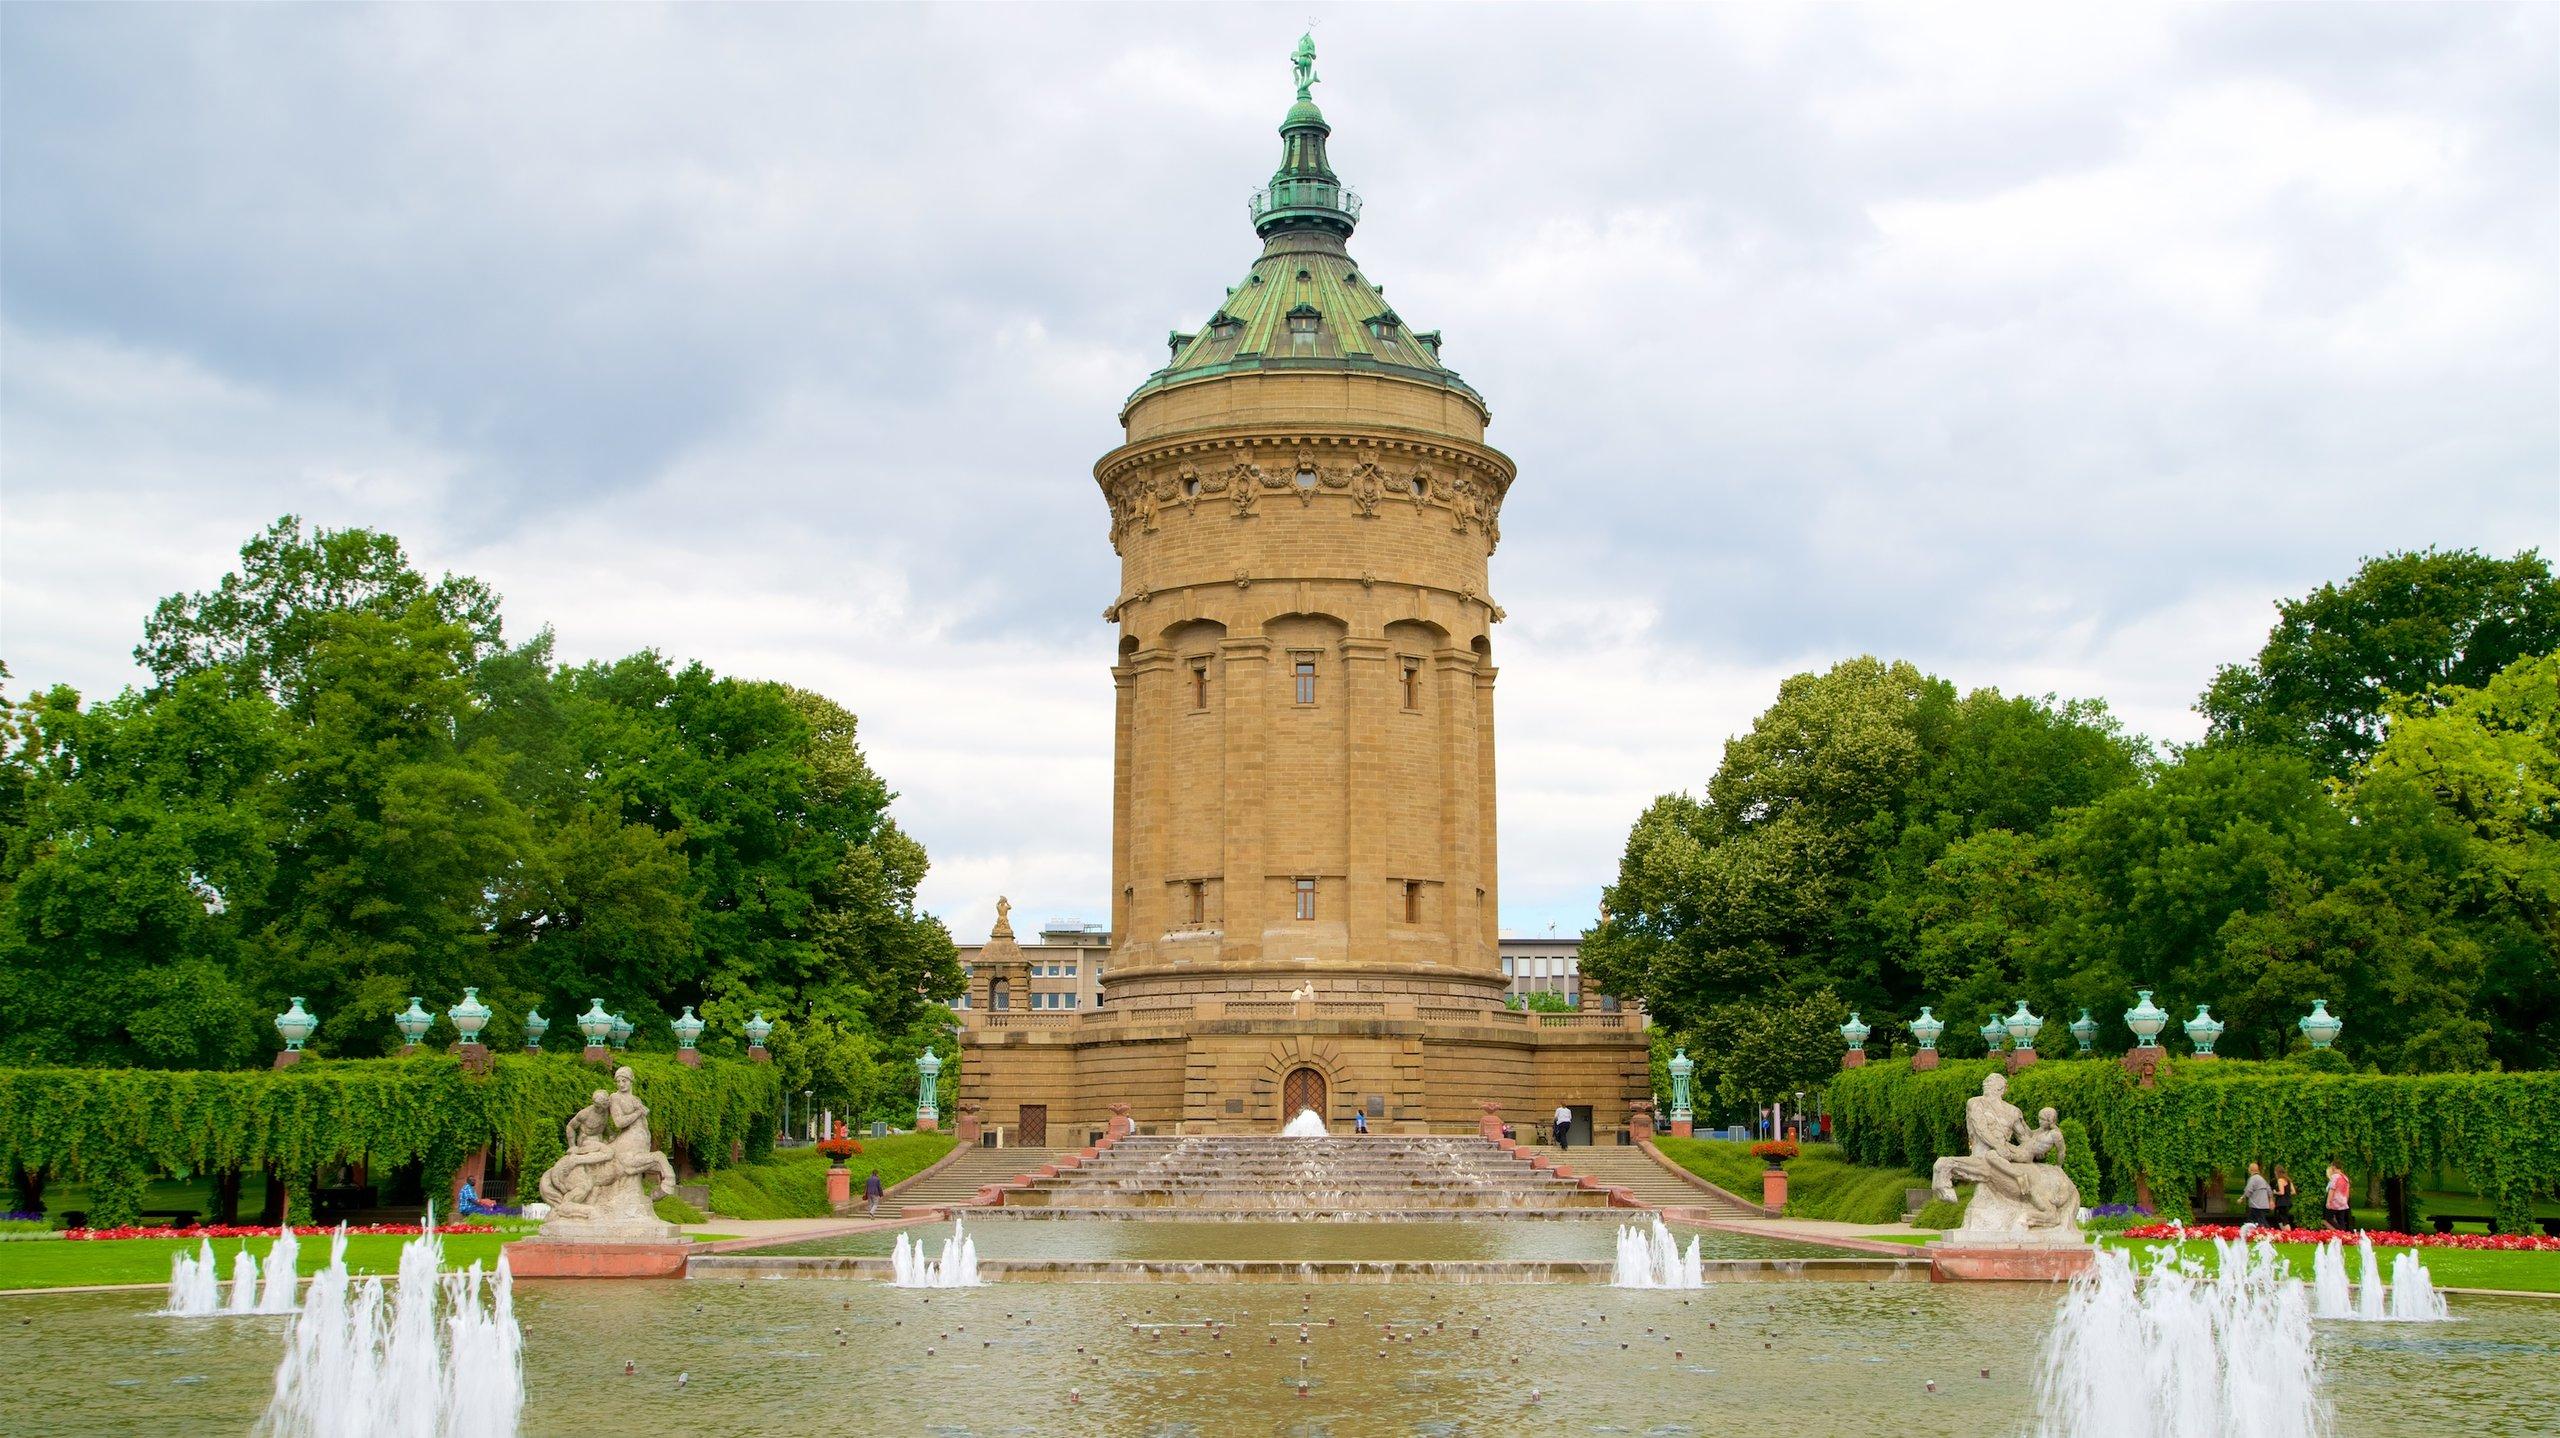 Wasserturm In Mannheim Tours And Activities Expedia